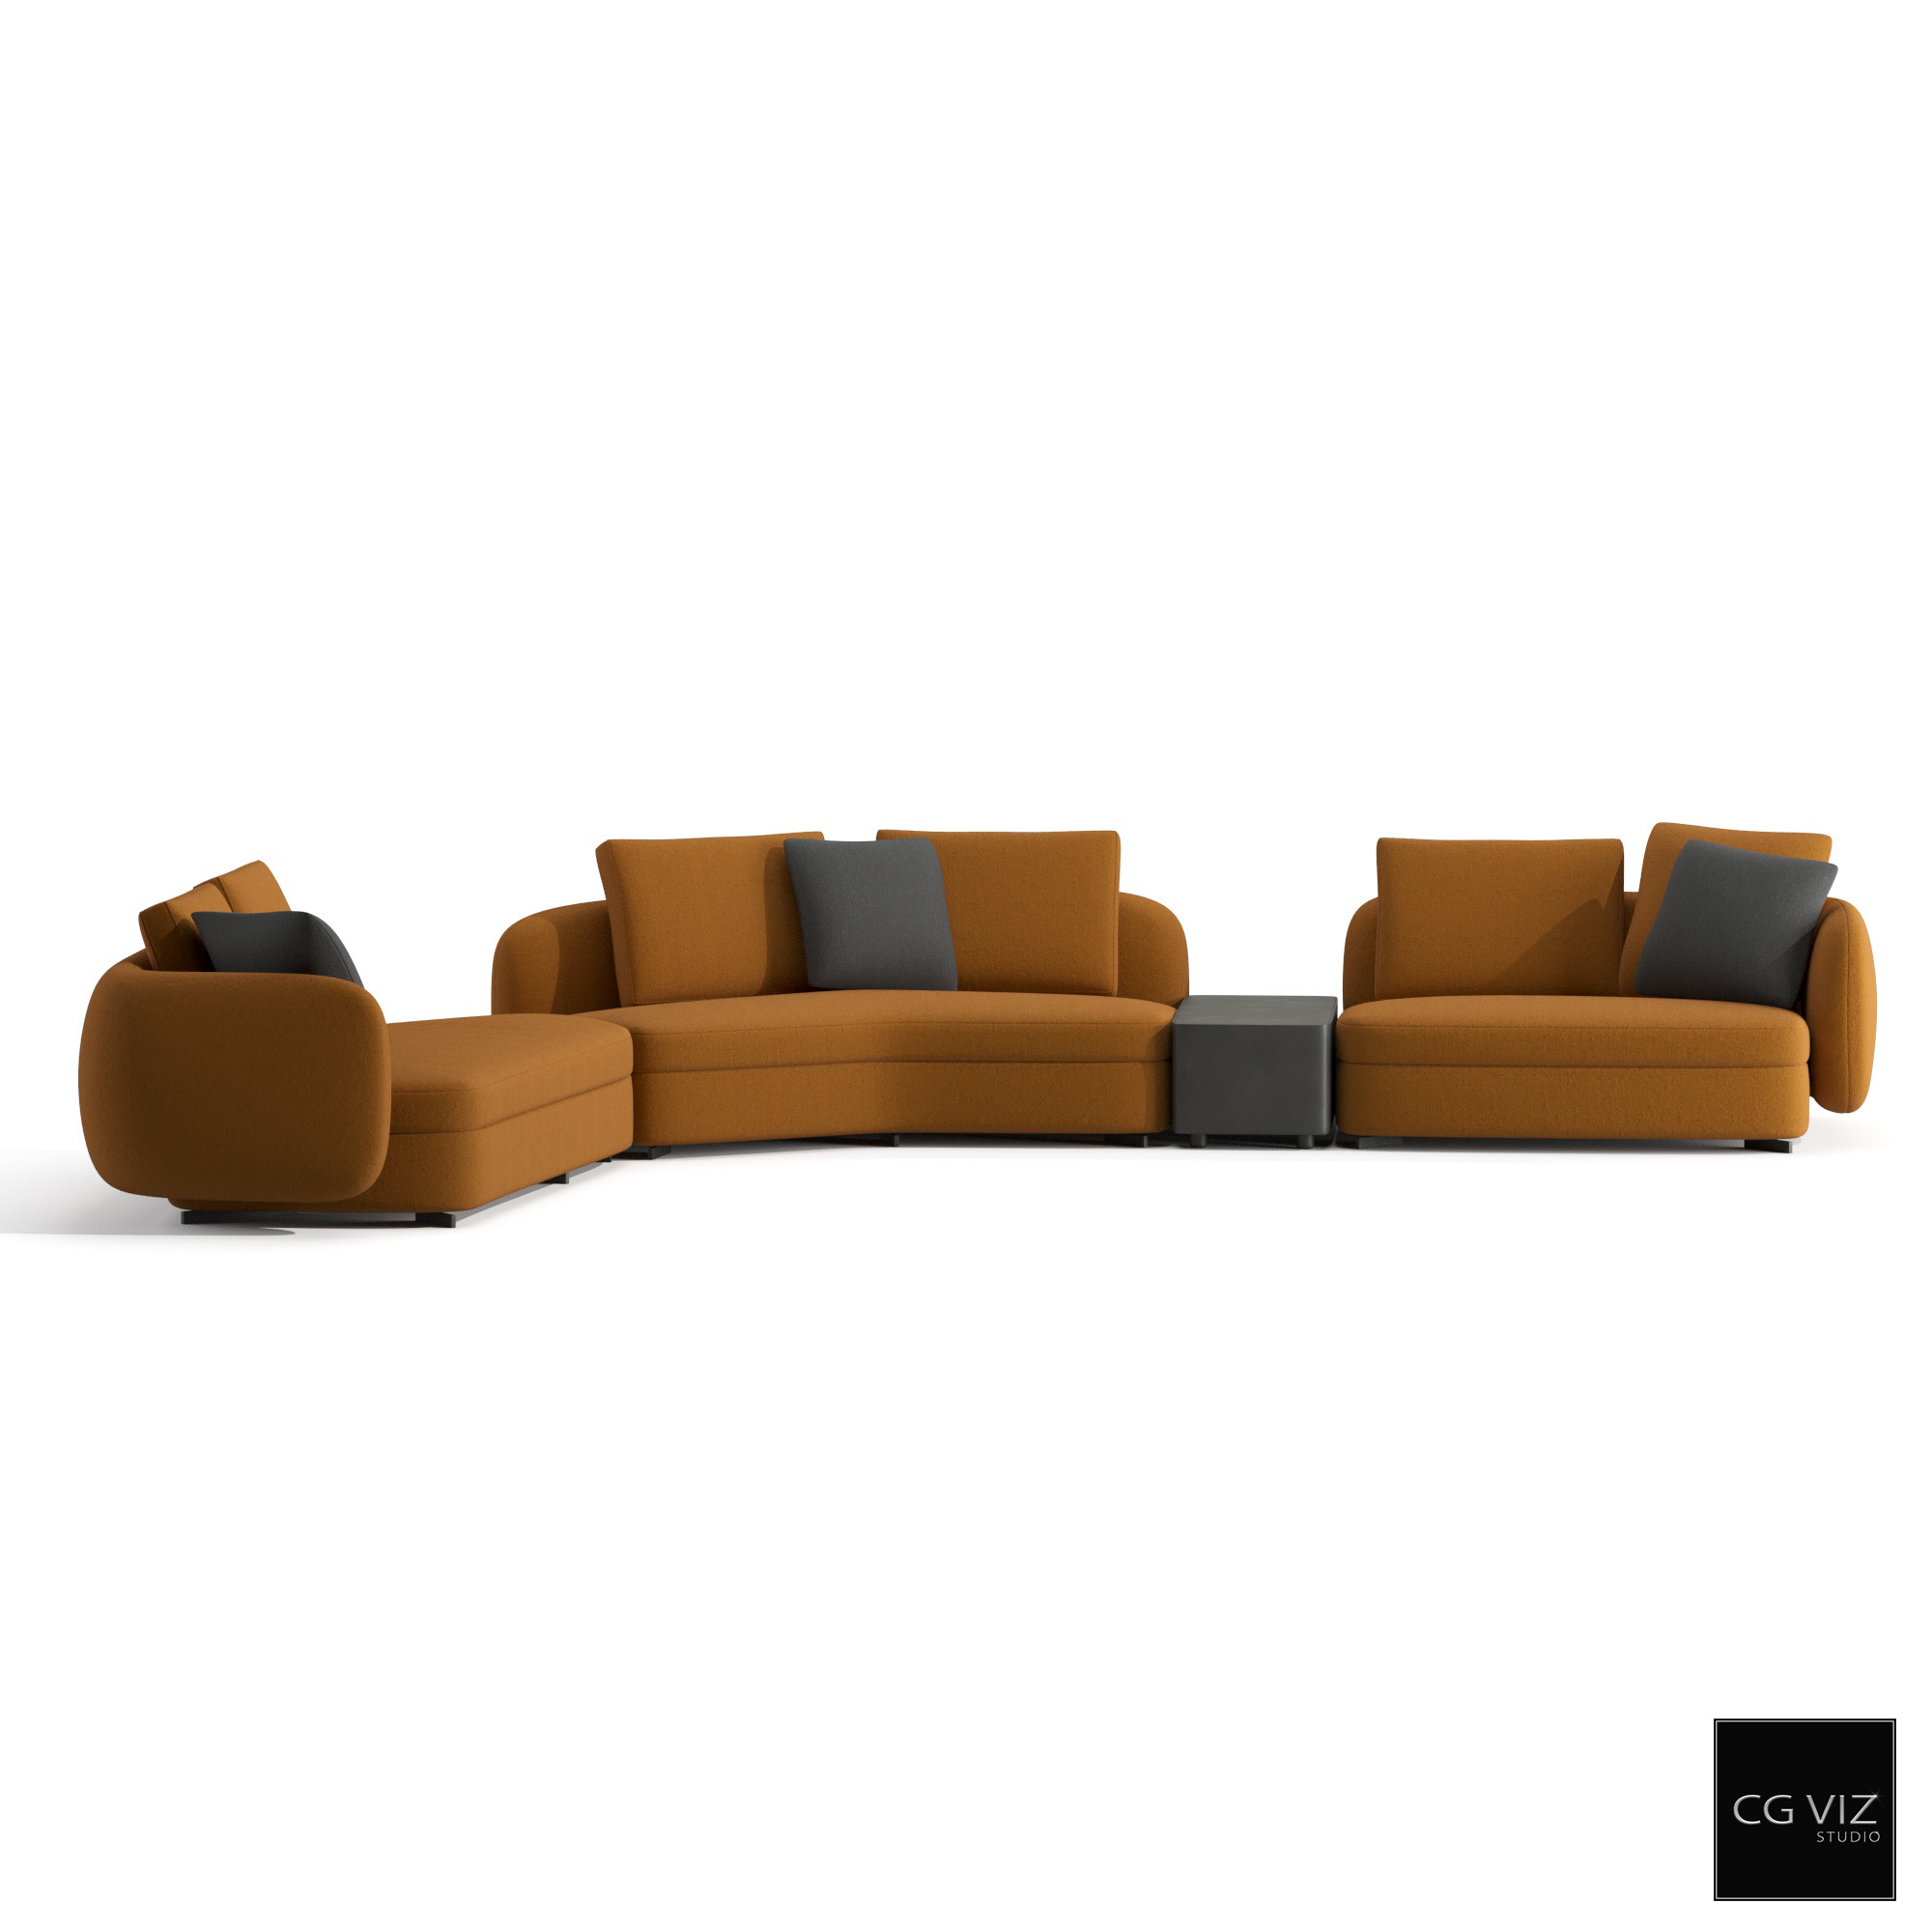 Rendered Preview of Poliform Saint-Germain Sofa 3D Model